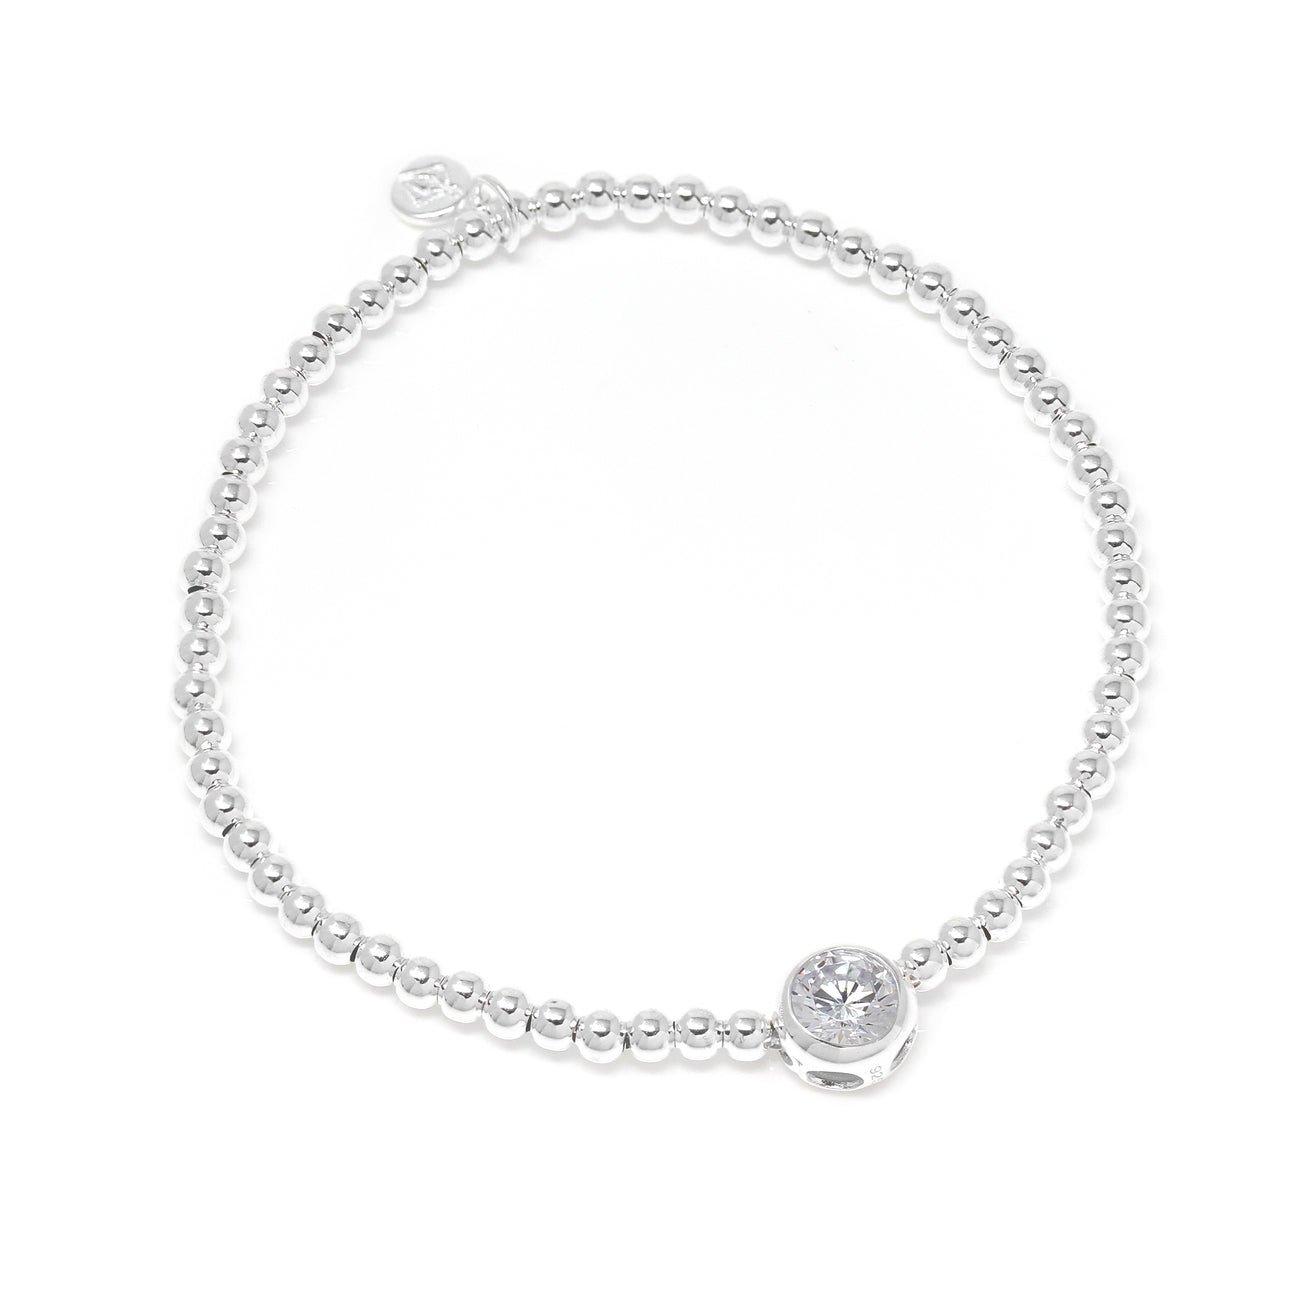 April Birthstone Bracelet - Sterling Silver